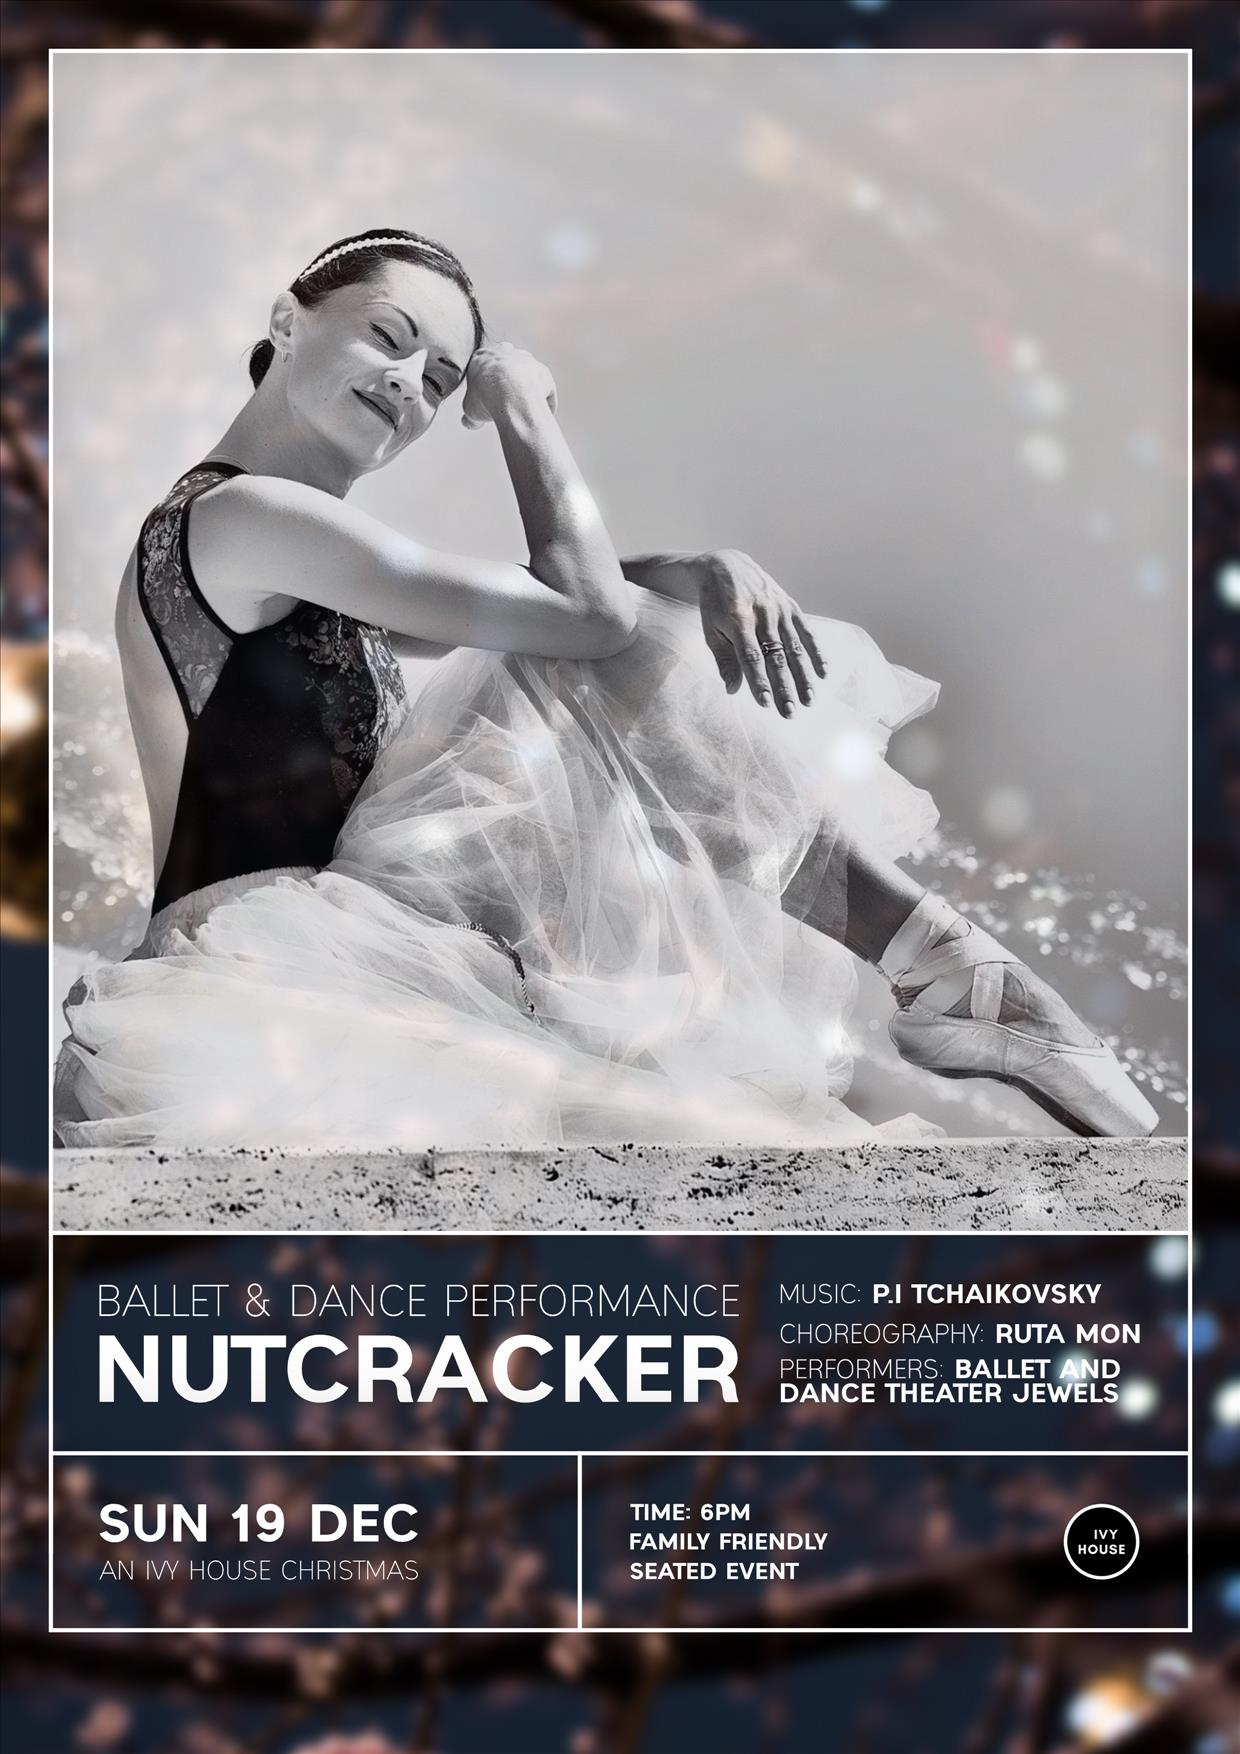 Nutcracker Ballet & Dance Performance at Ivy House poster